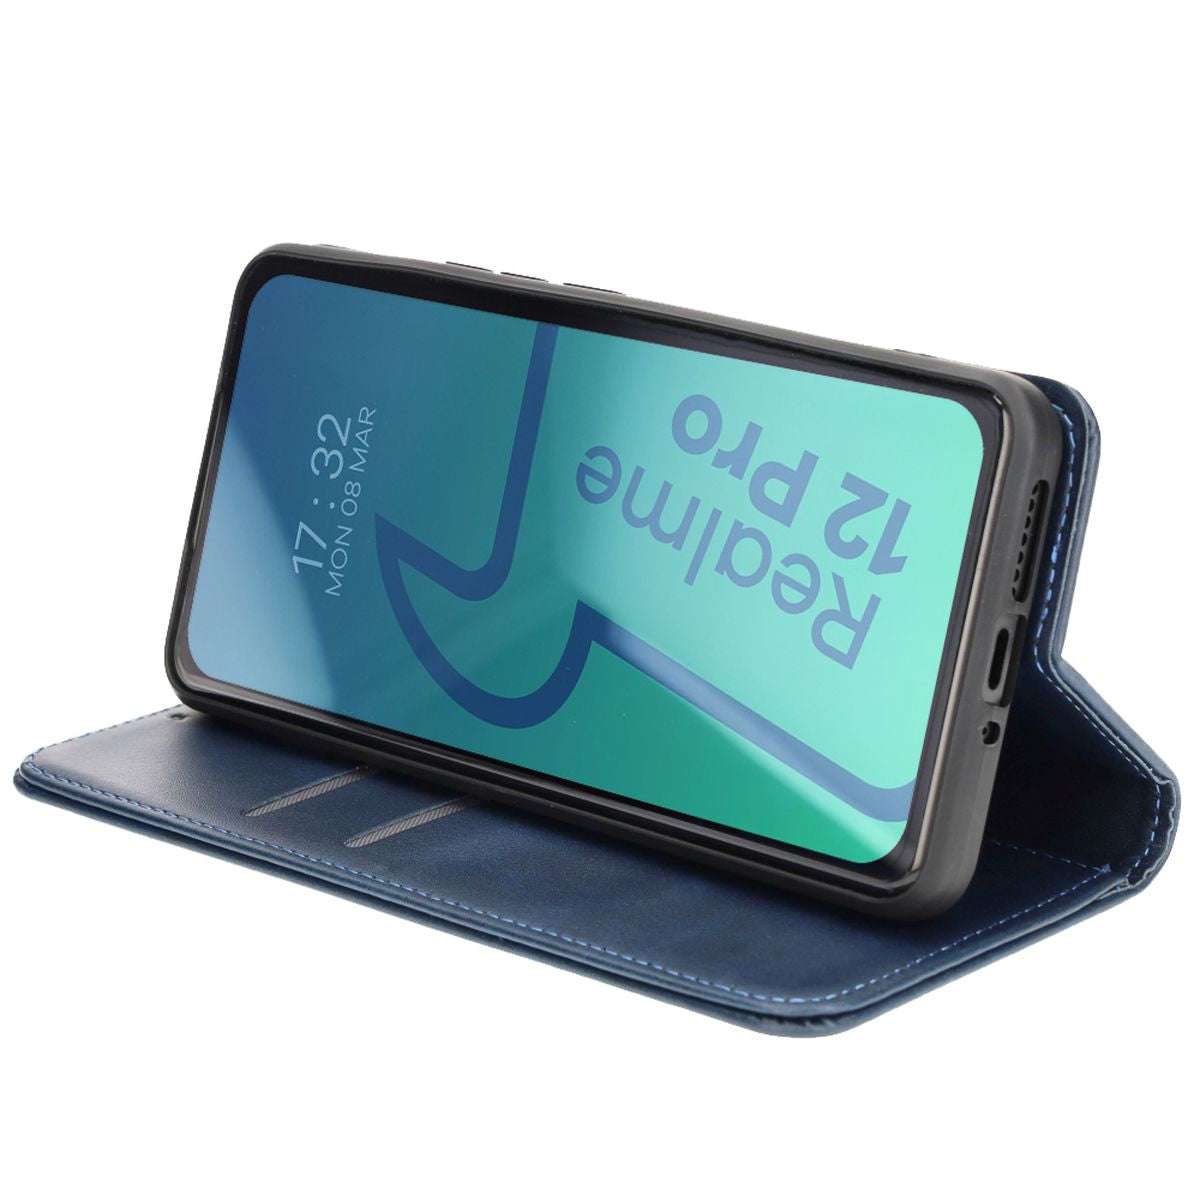 Schutzhülle für Realme 12 Pro / 12 Pro+, Bizon Case Pocket Pro, Dunkelblau